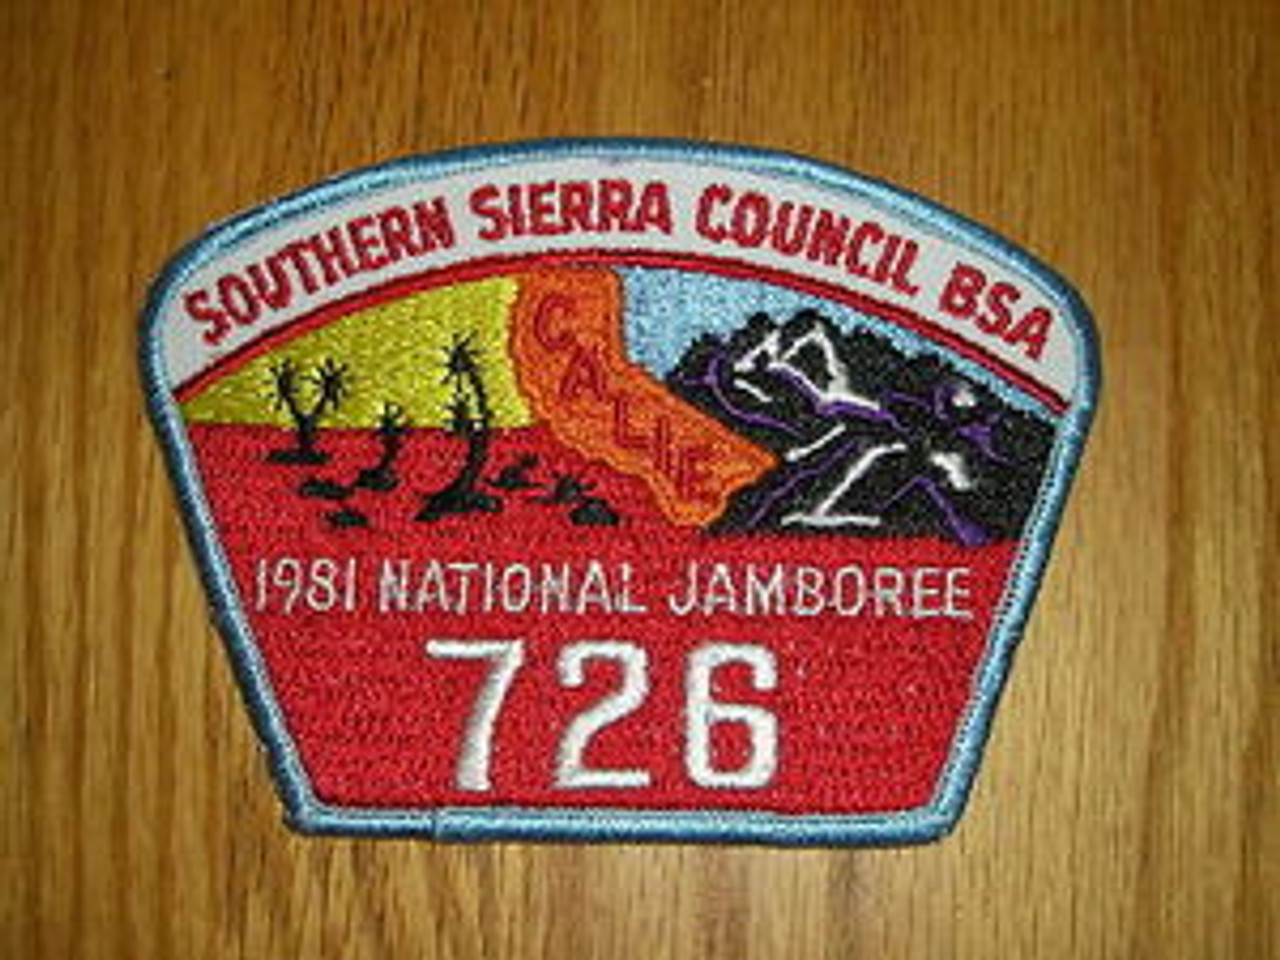 1981 National Jamboree JSP - Southern Sierra Council